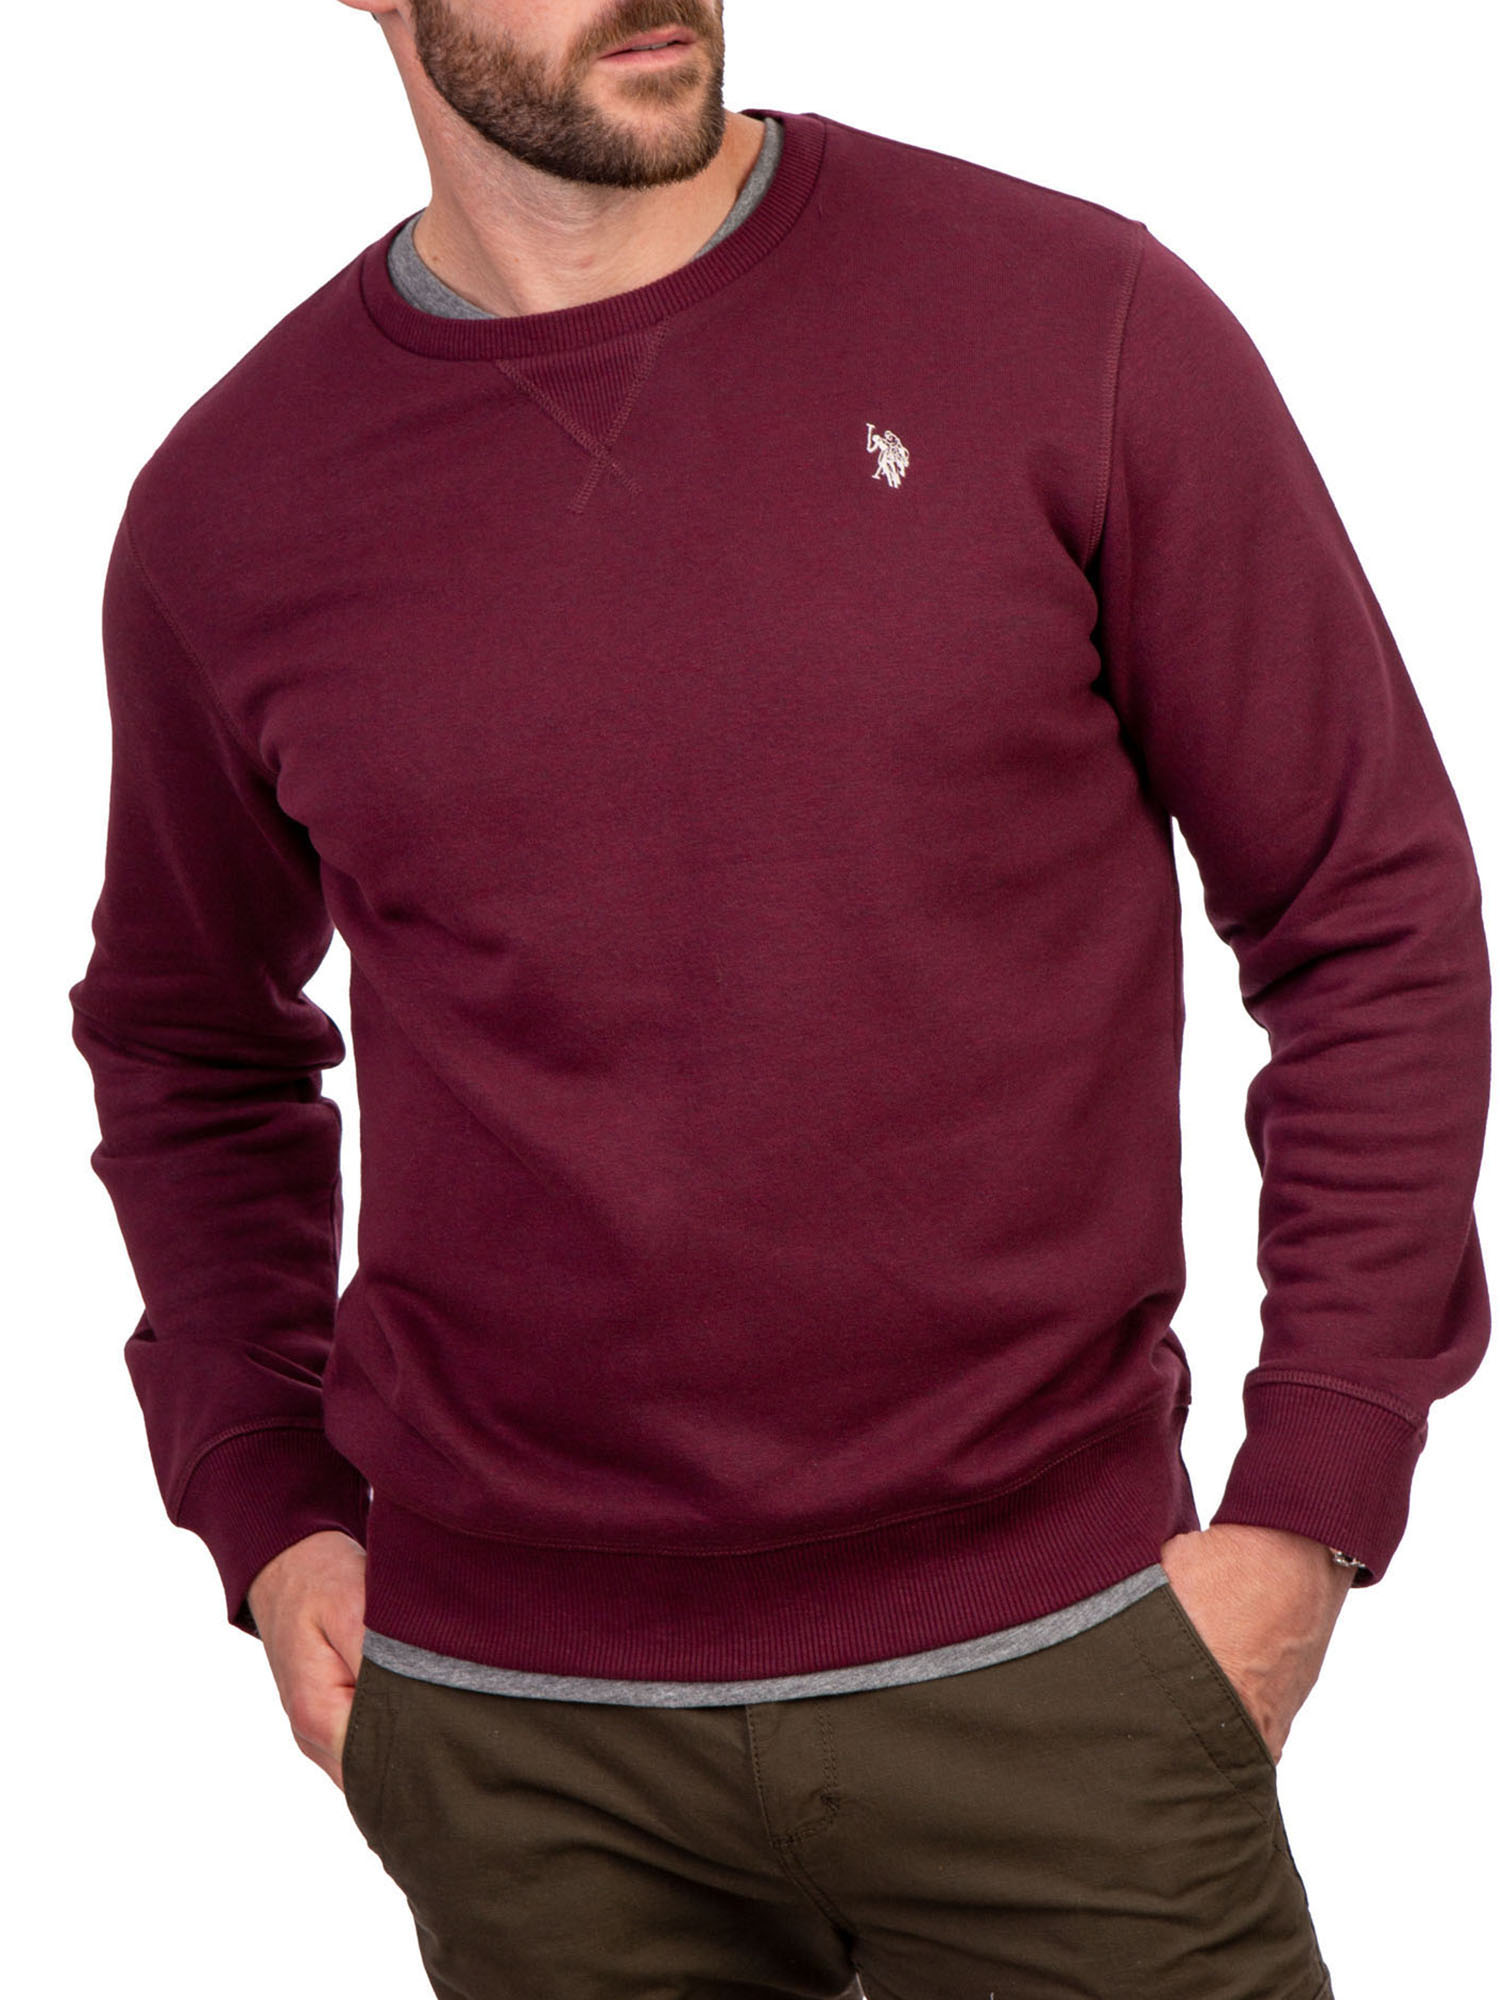 U.S. Polo Assn. Men's Knit Sweater Shirt - image 1 of 4